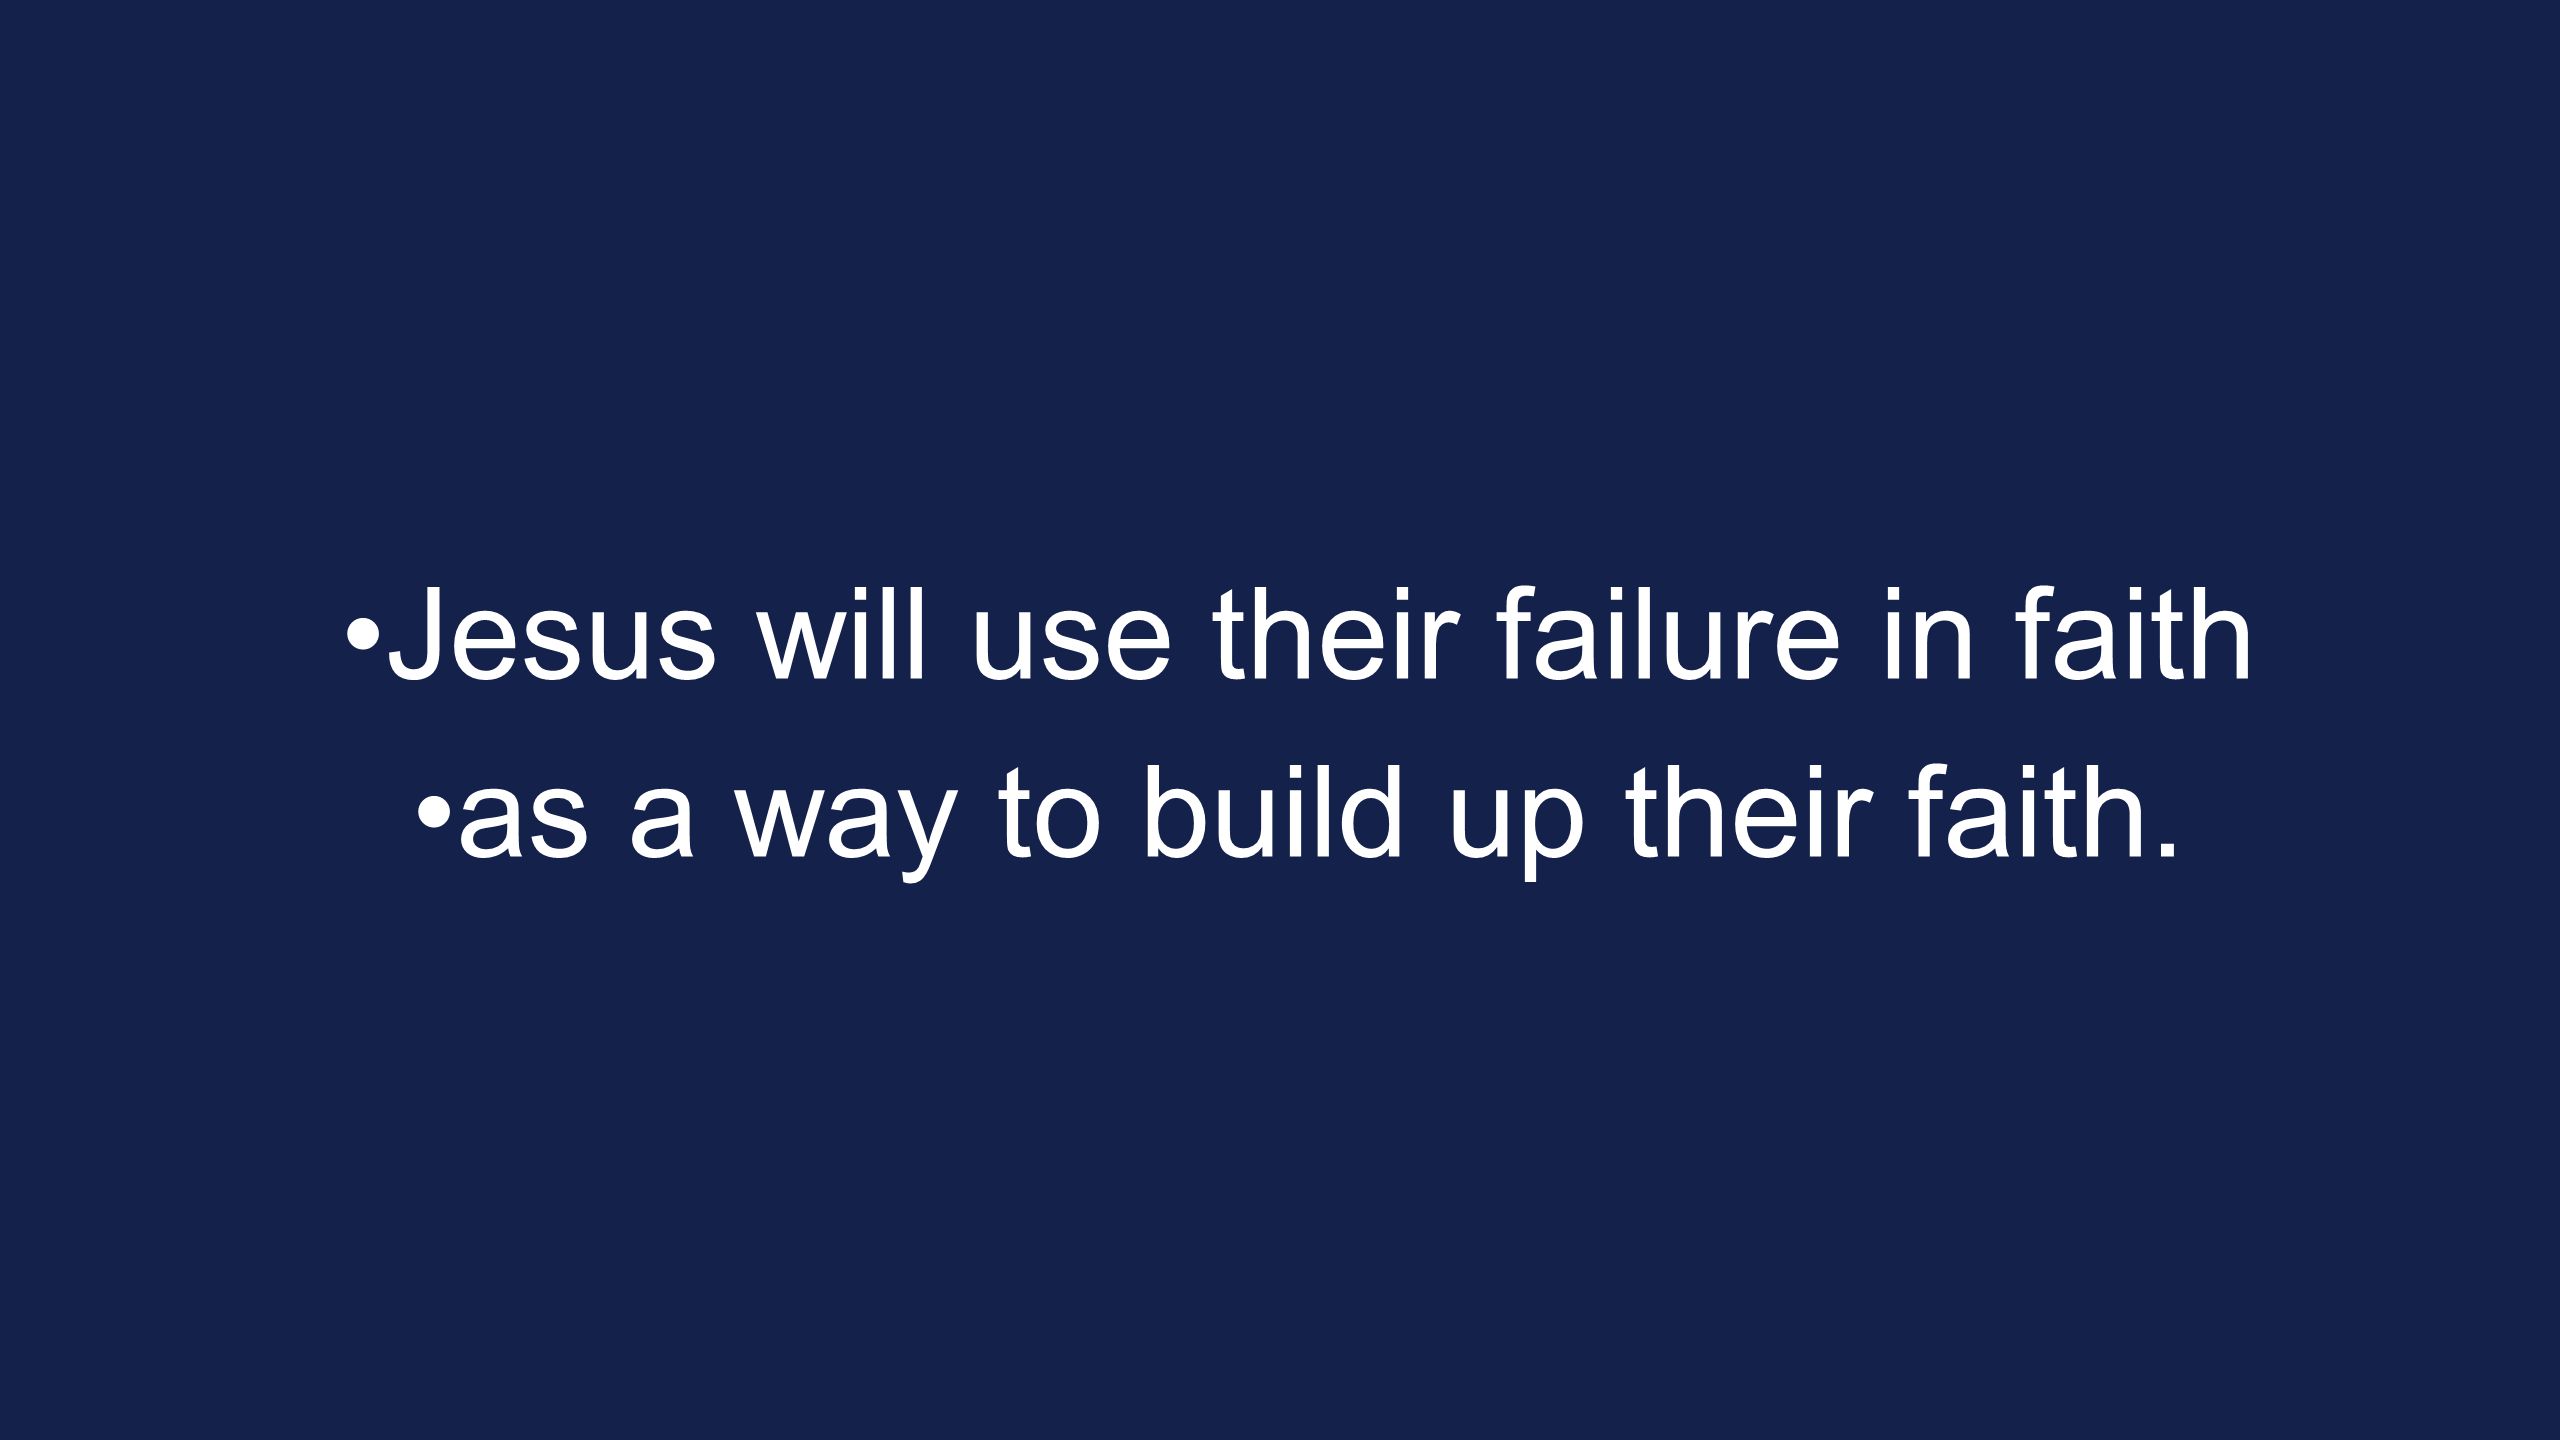 Jesus will use their failure in faith as a way to build up their faith.